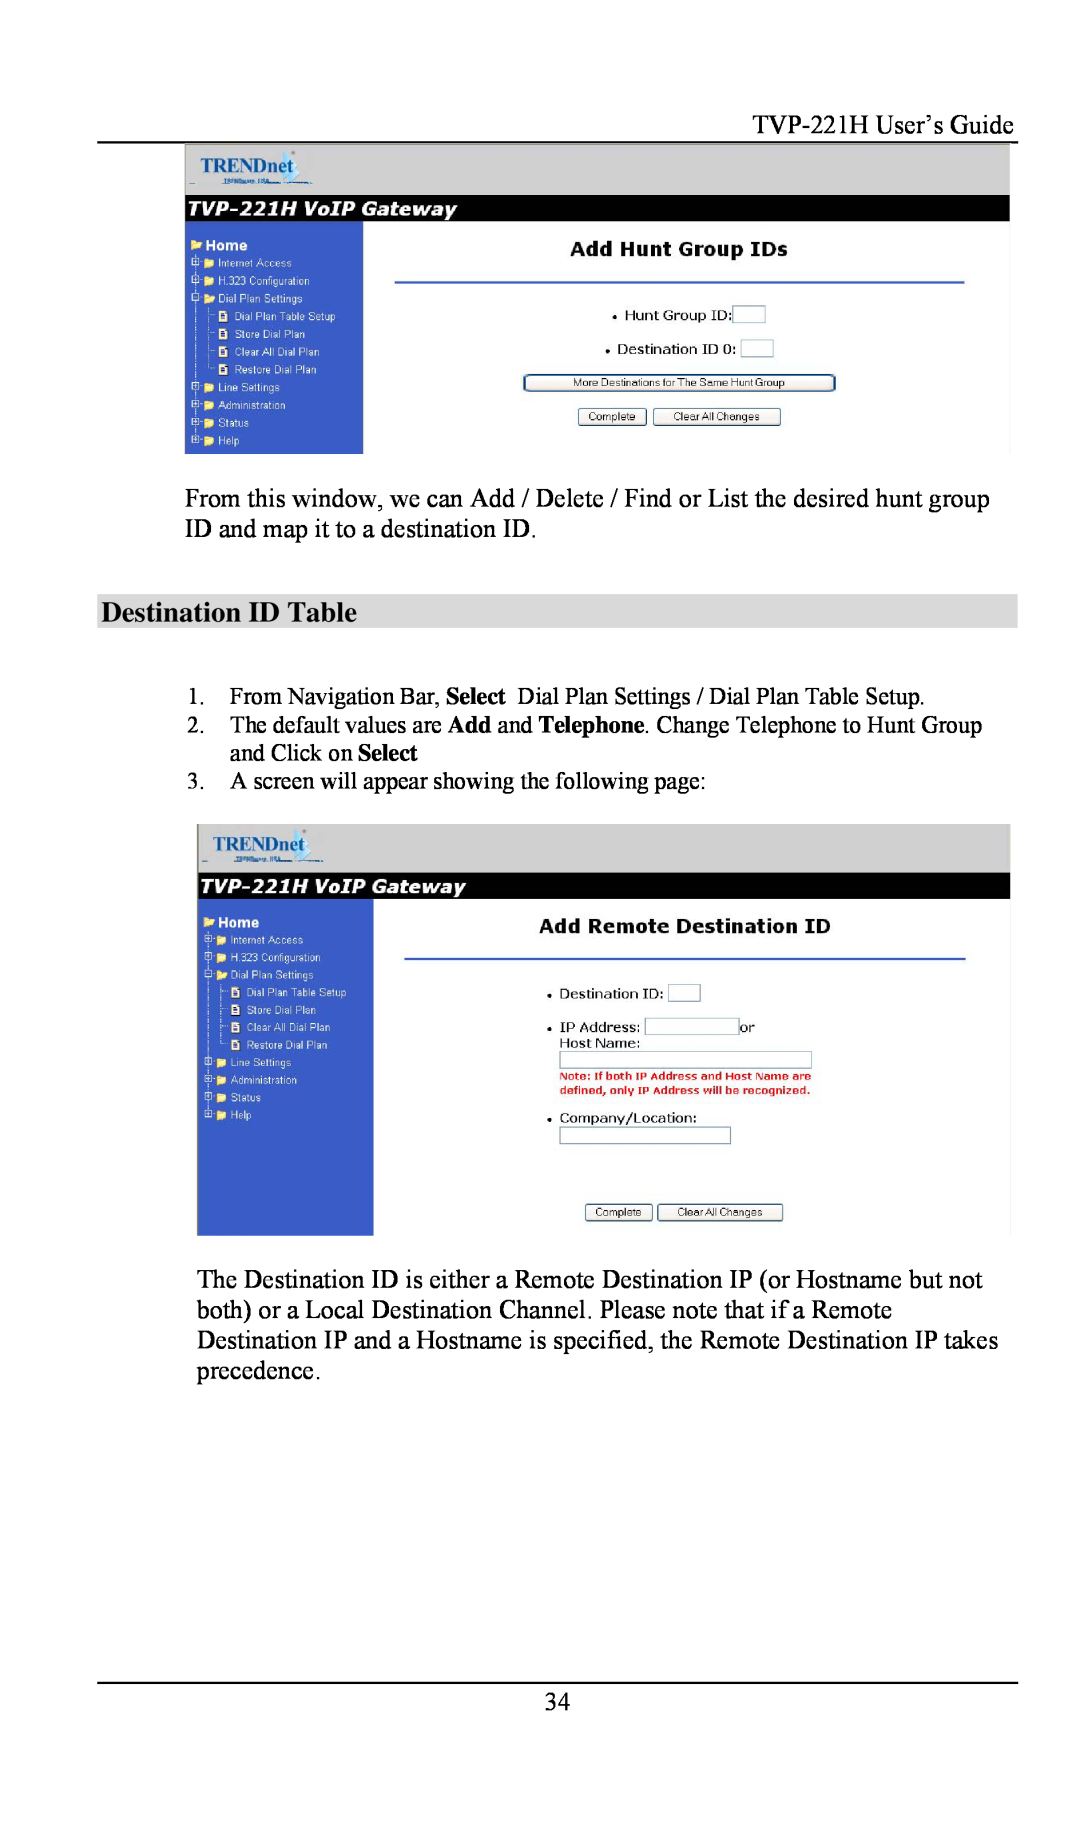 TRENDnet TVP- 221H, VoIP Gateway manual Destination ID Table 